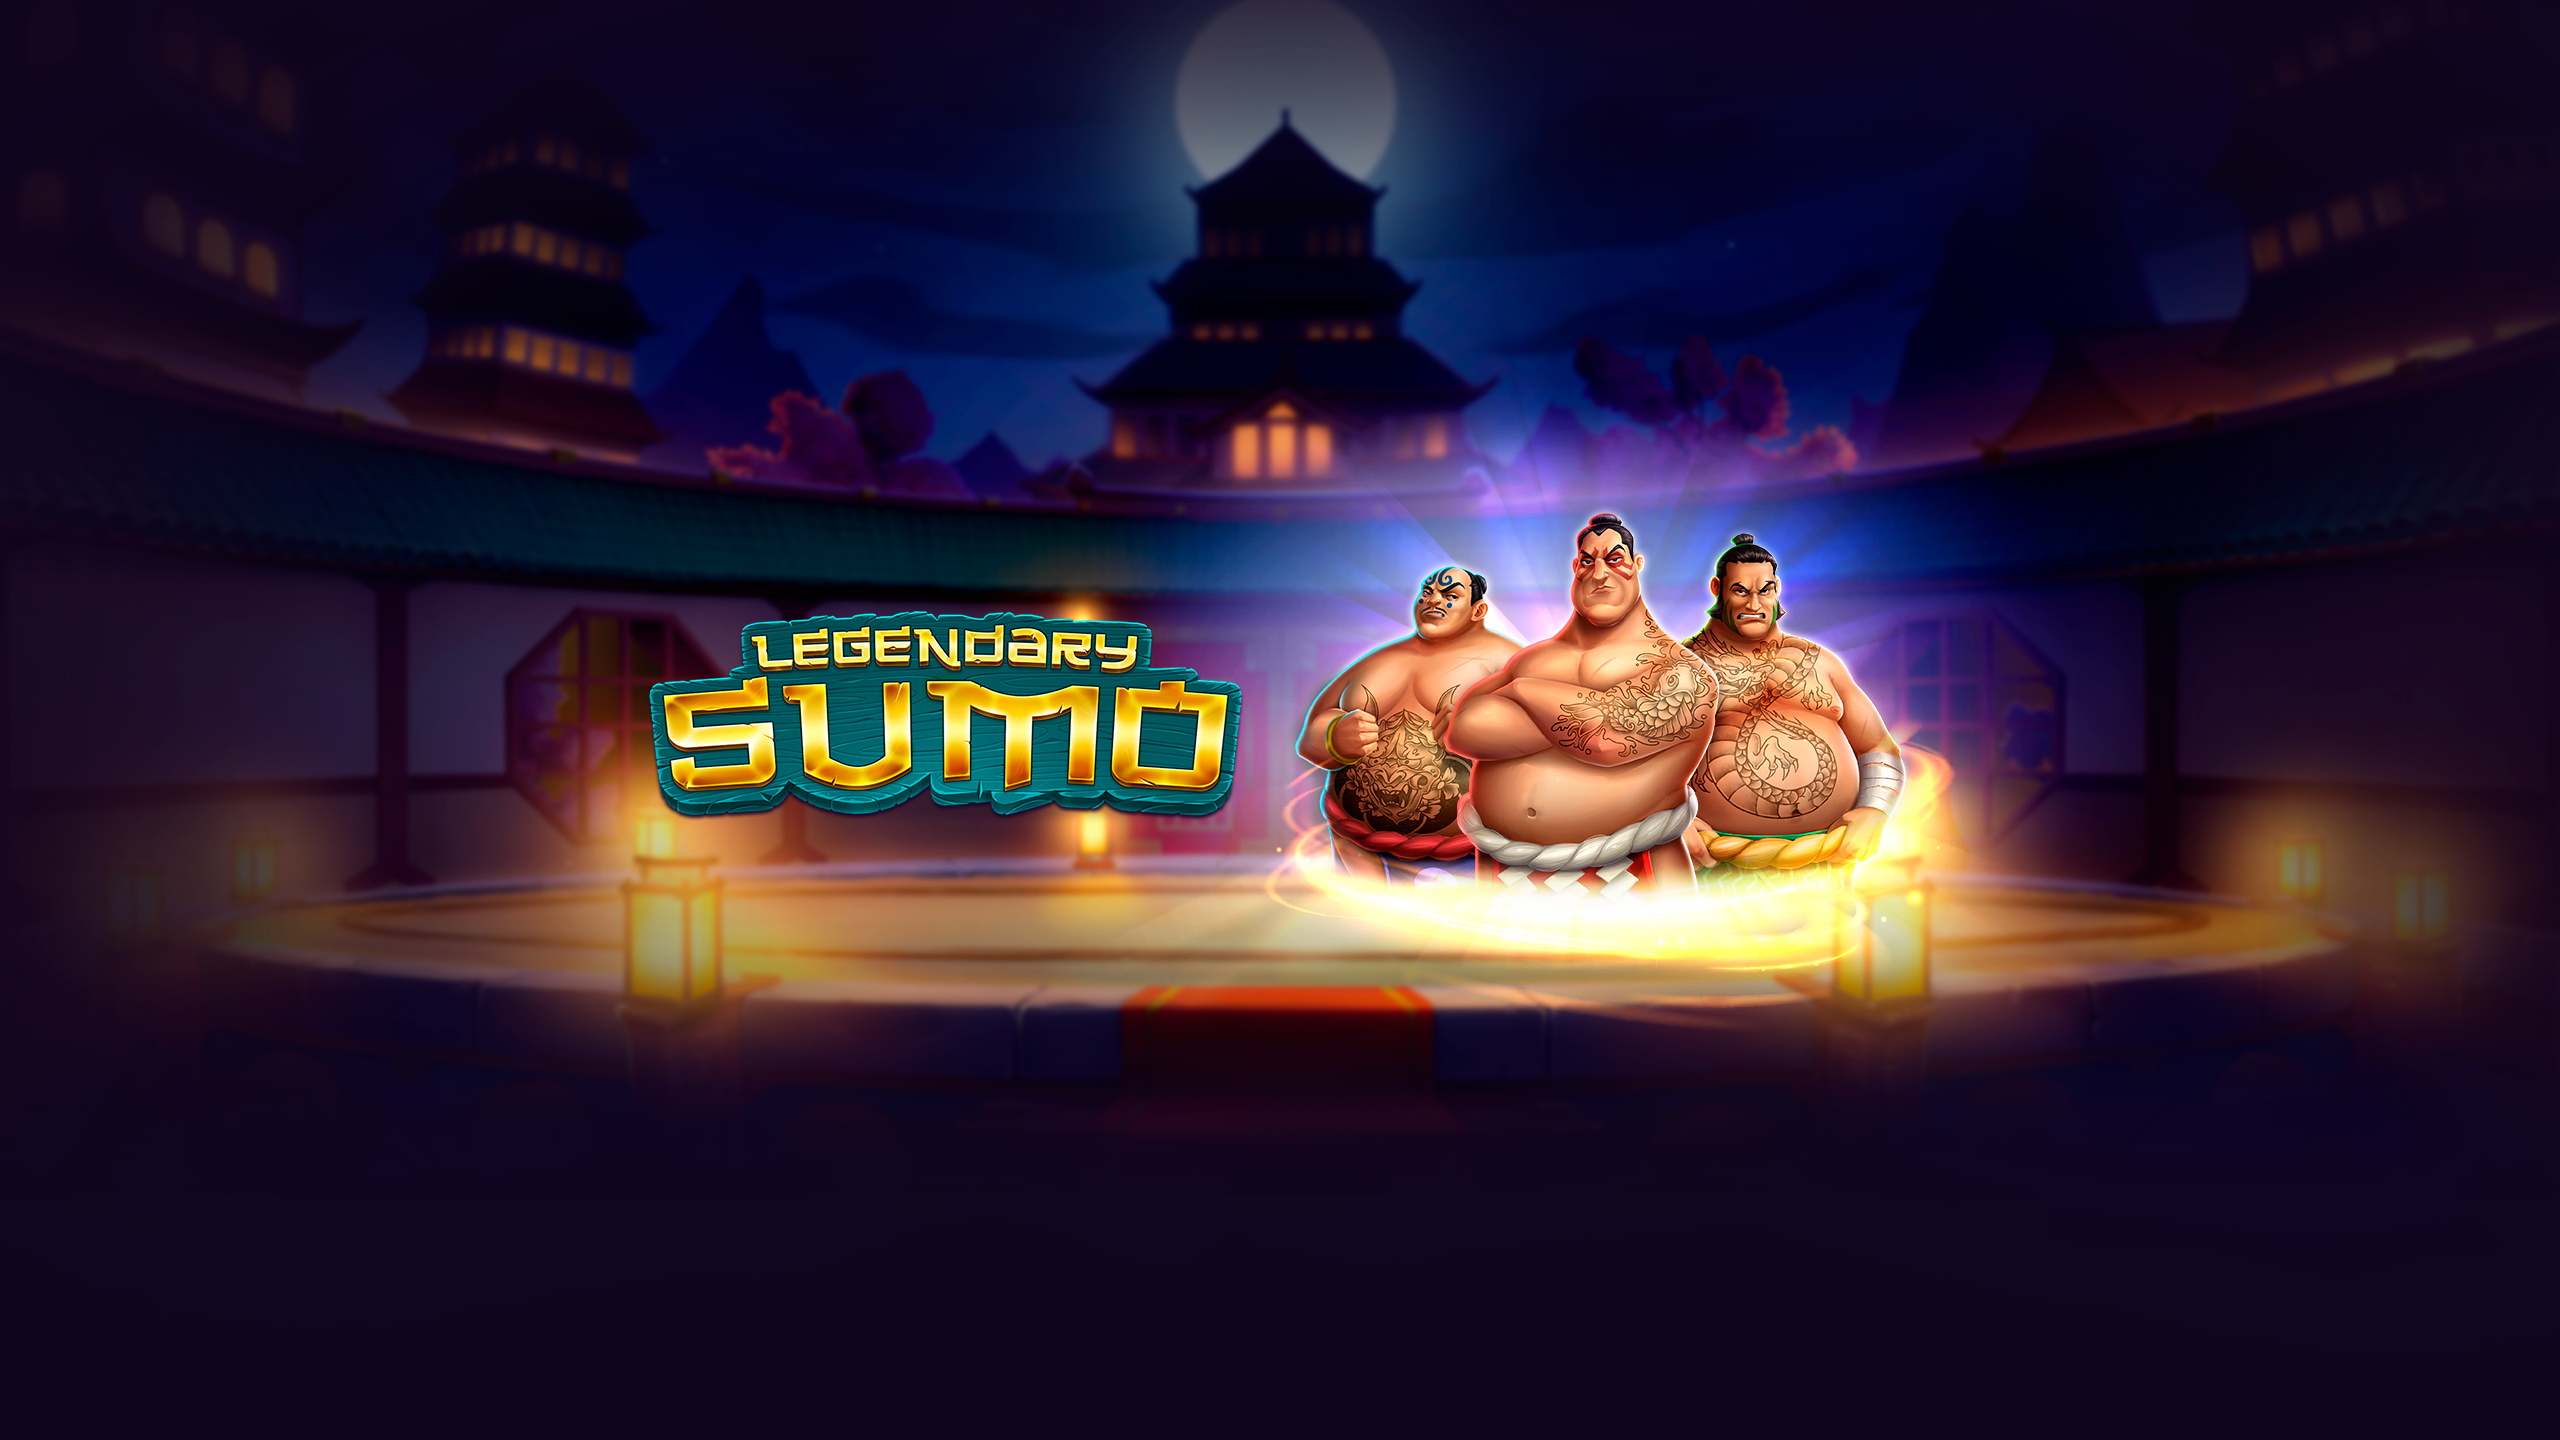 Legendary Sumo demo